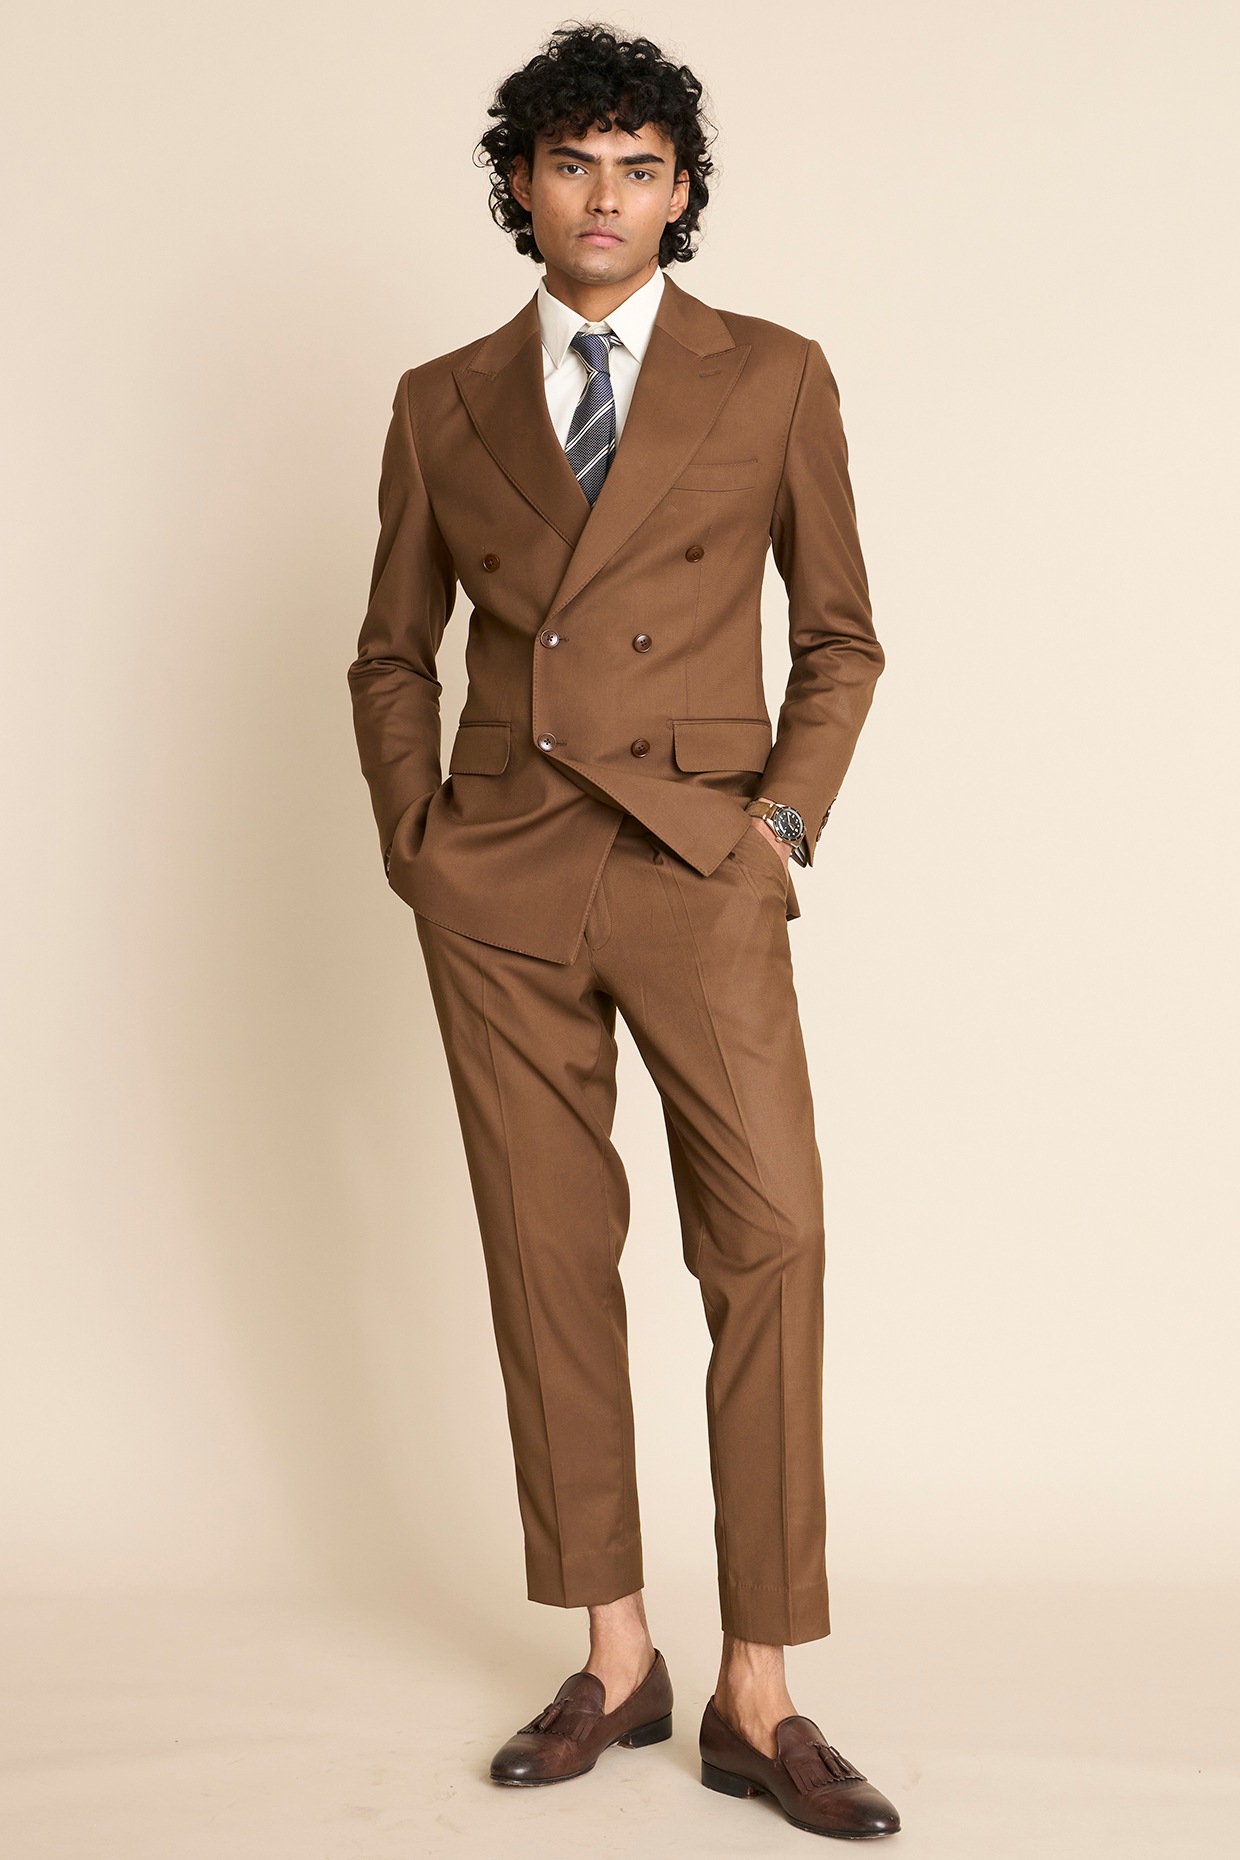 Discover 72+ new suit design image super hot